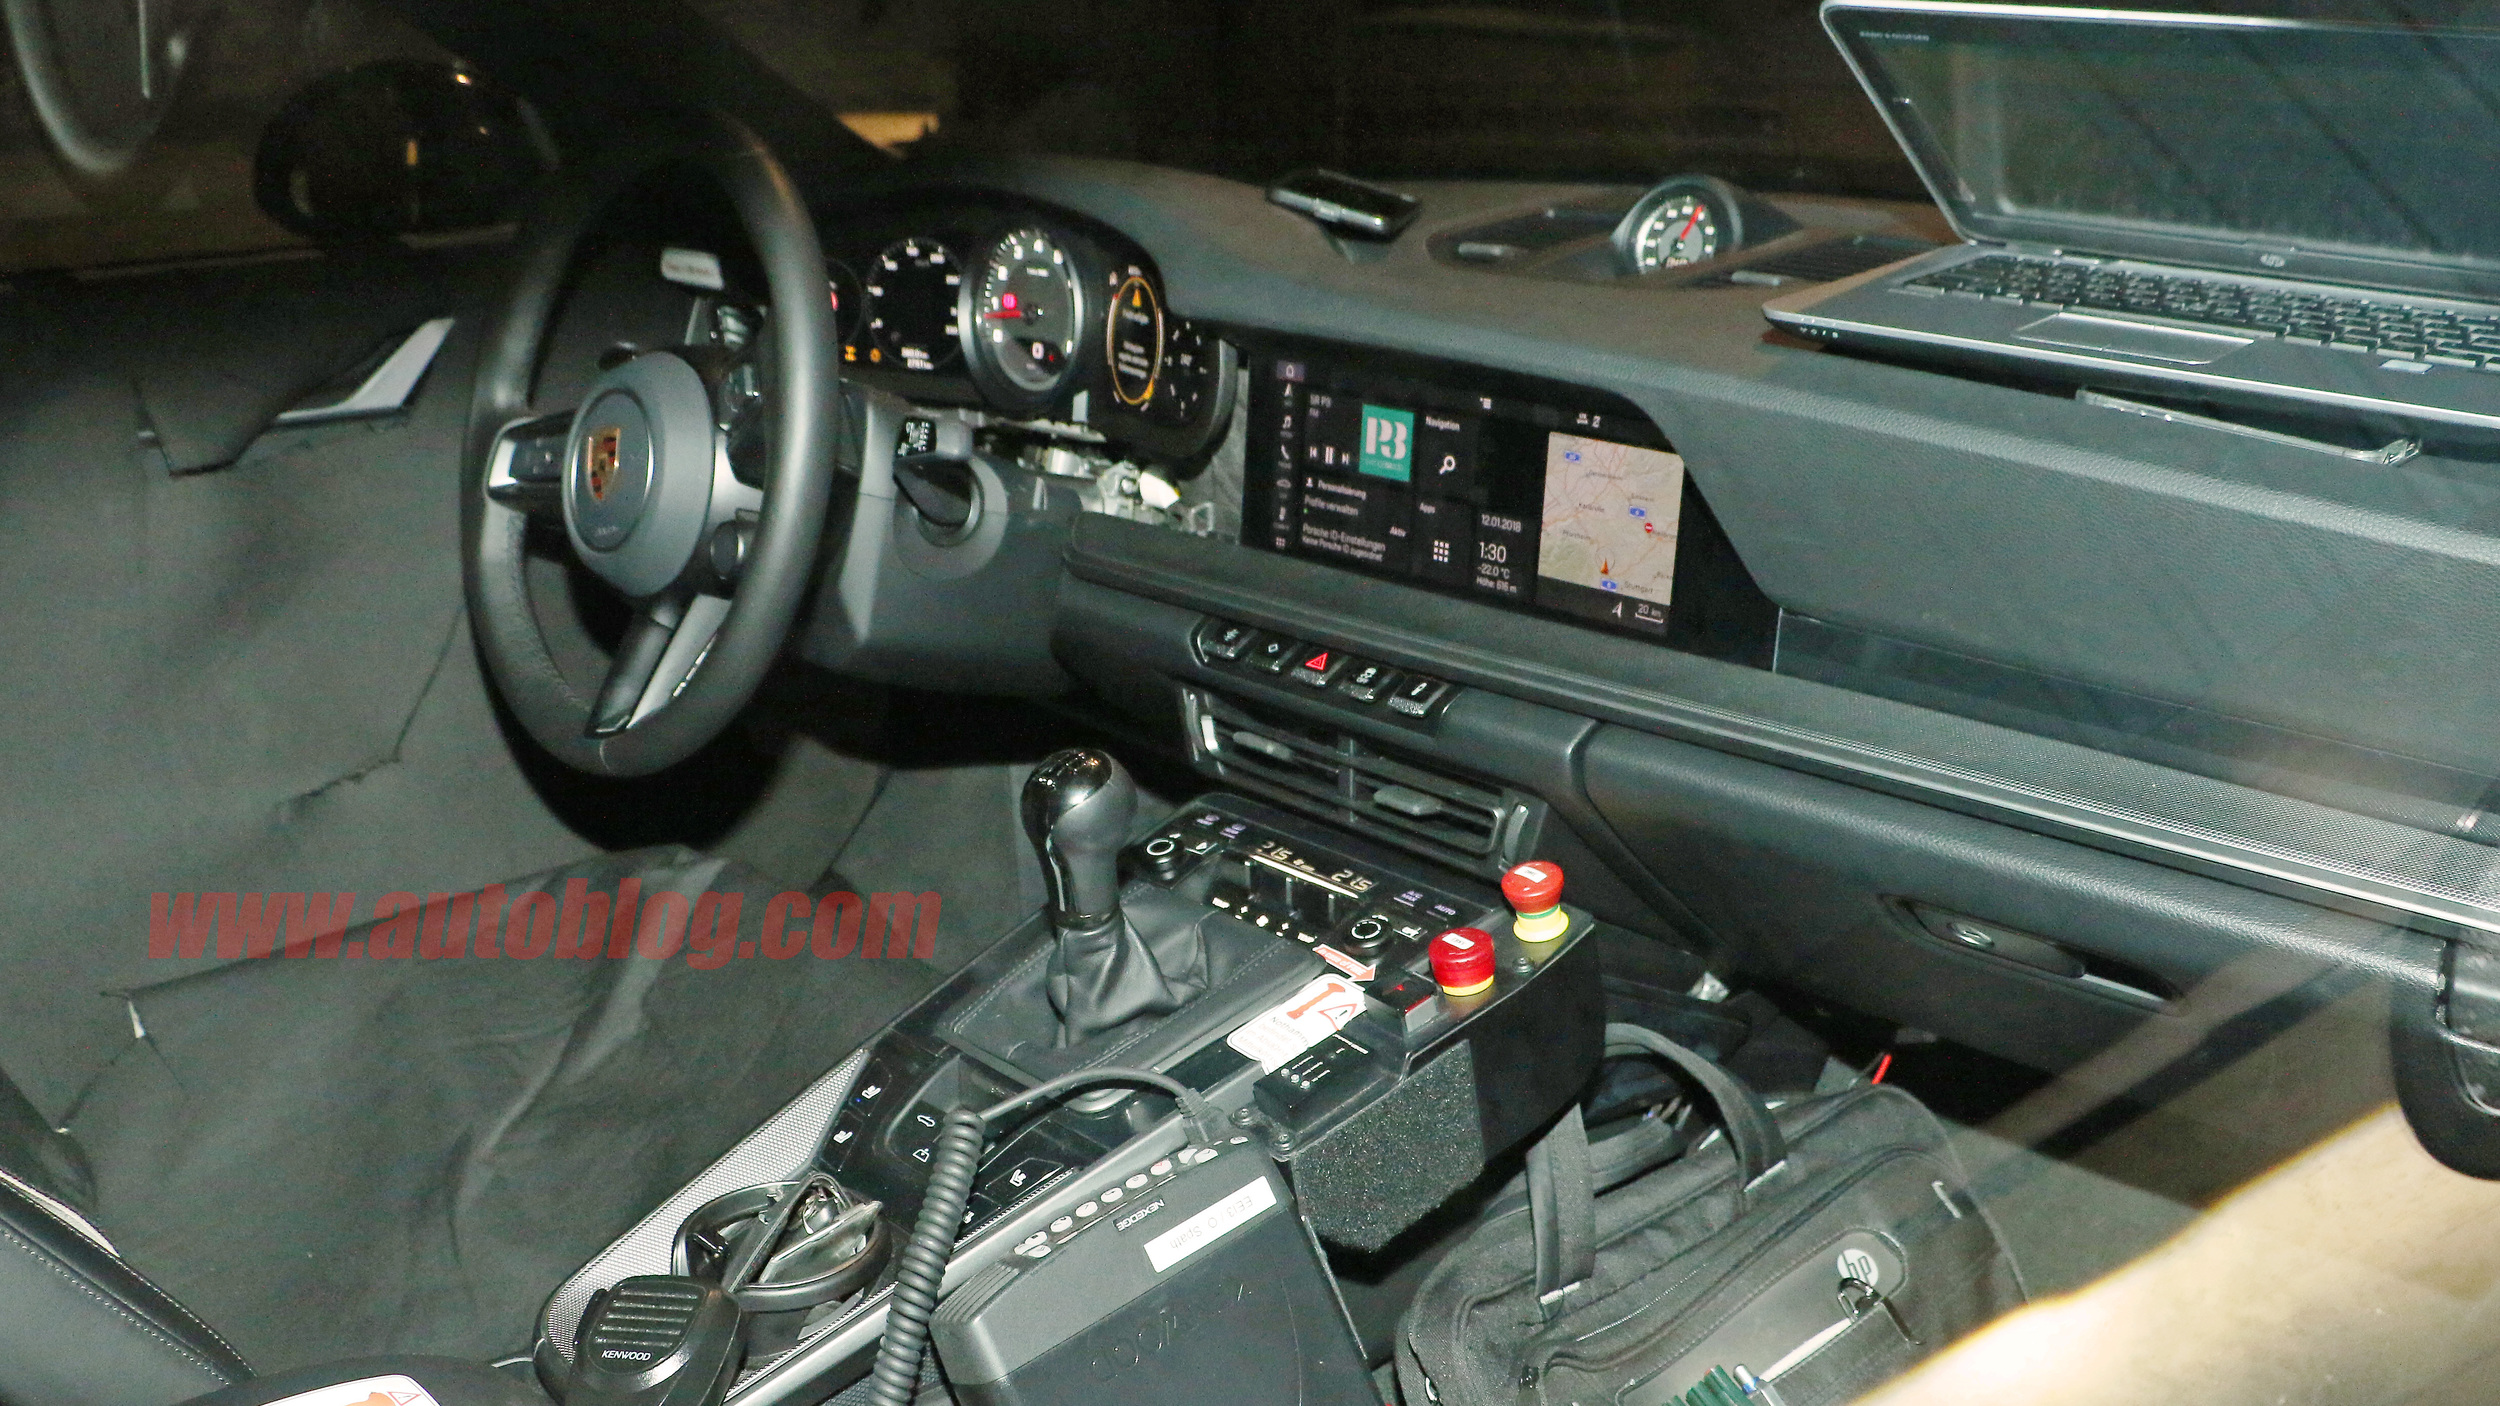 Hot News 2020 Porsche 911 992 Spy Shots Show Interior And